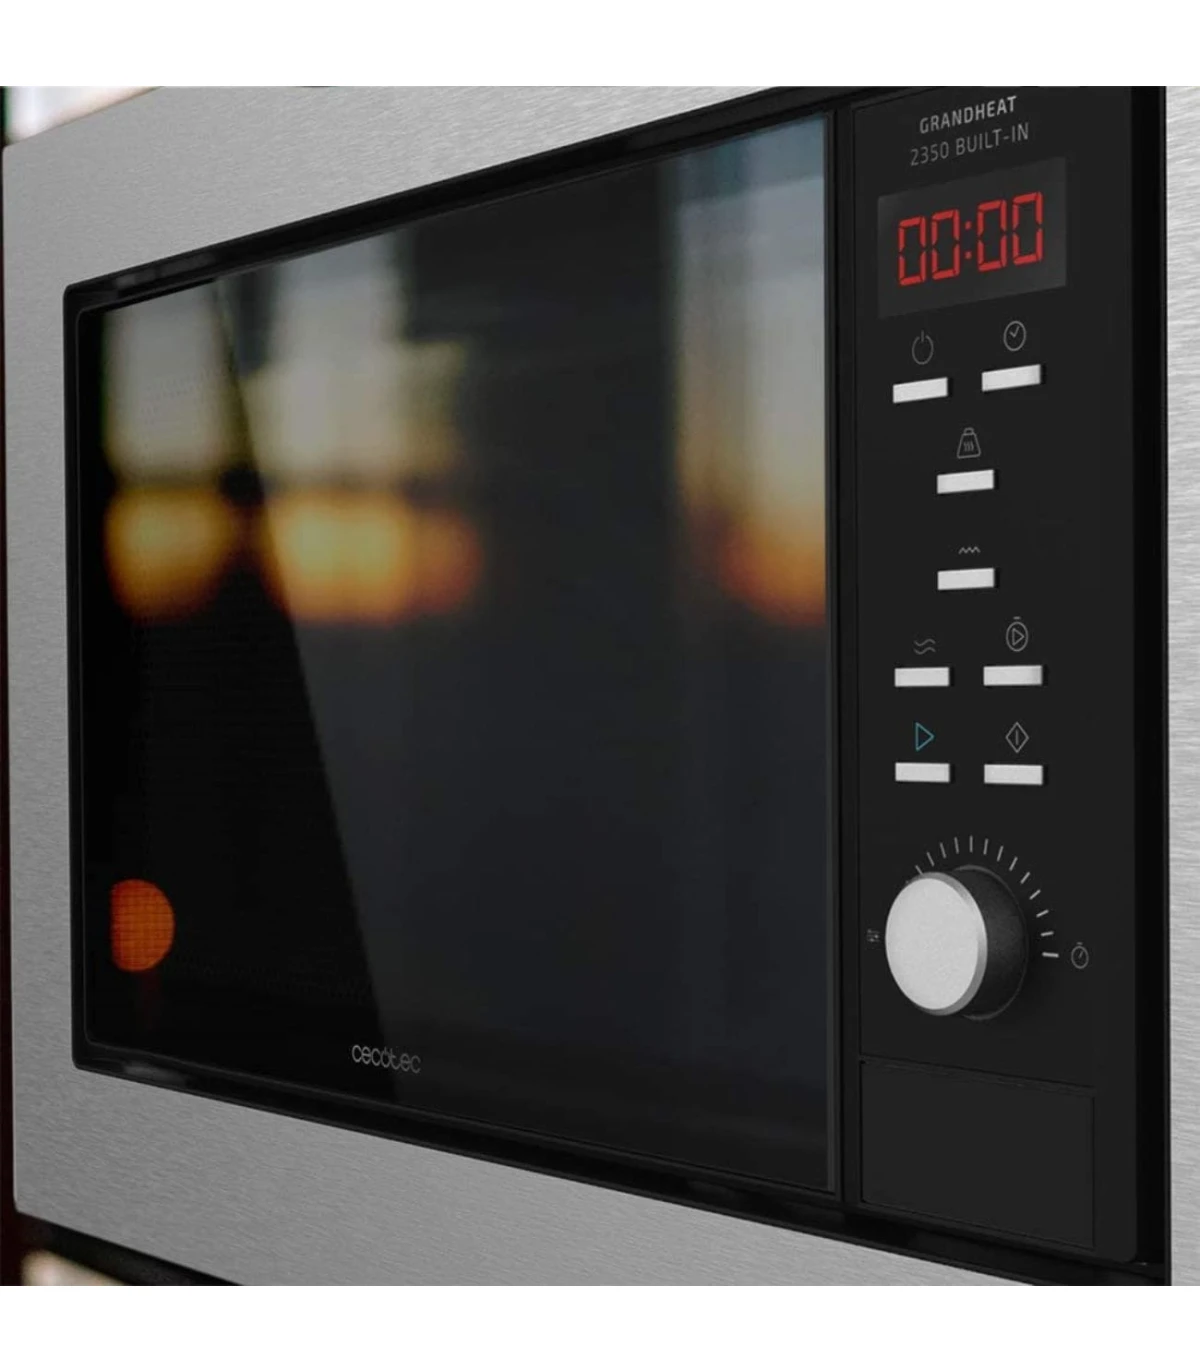 Microwave Cecotec GrandHeat 2500 de 25 litros integrado - Tenerife